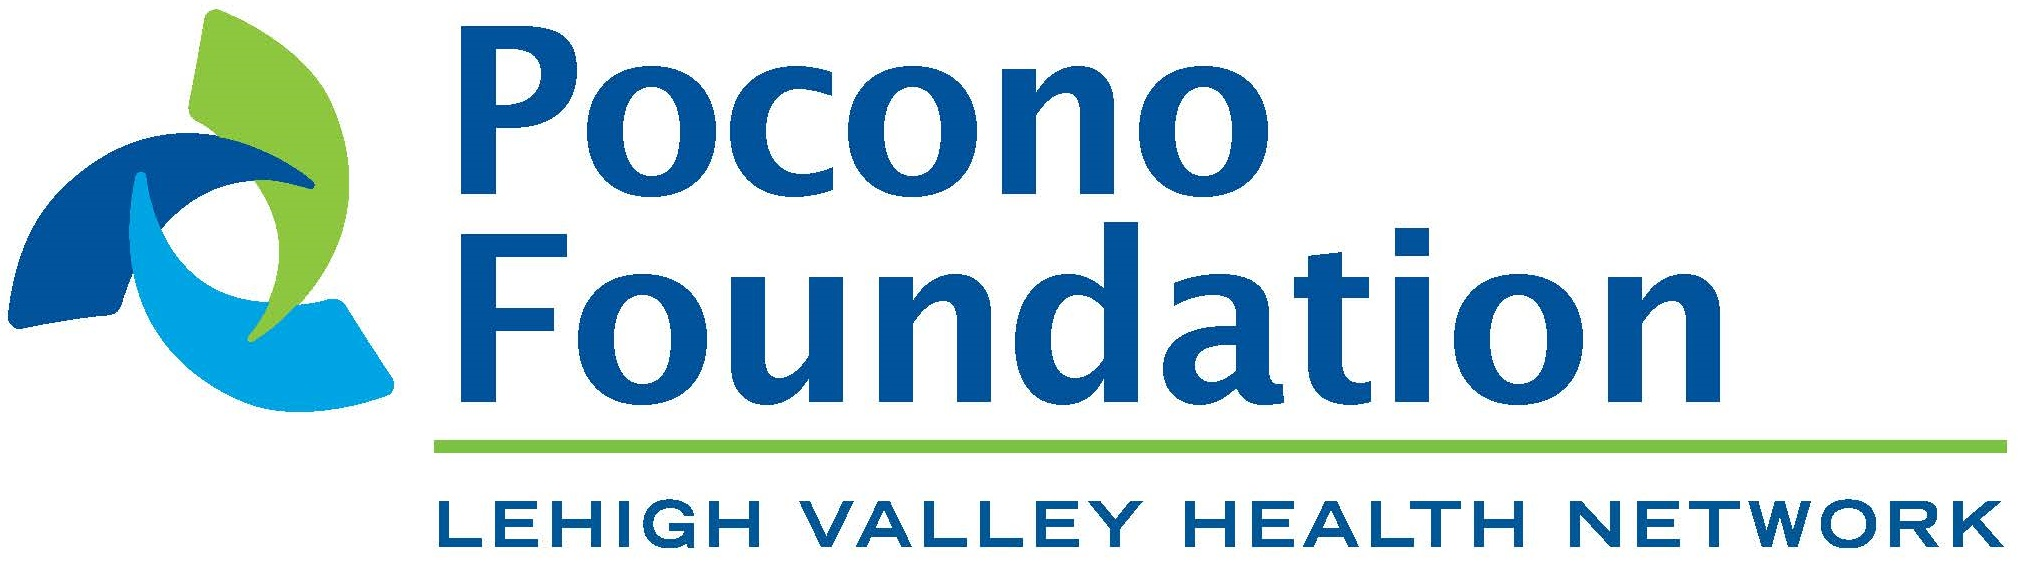 Pocono Foundation logo